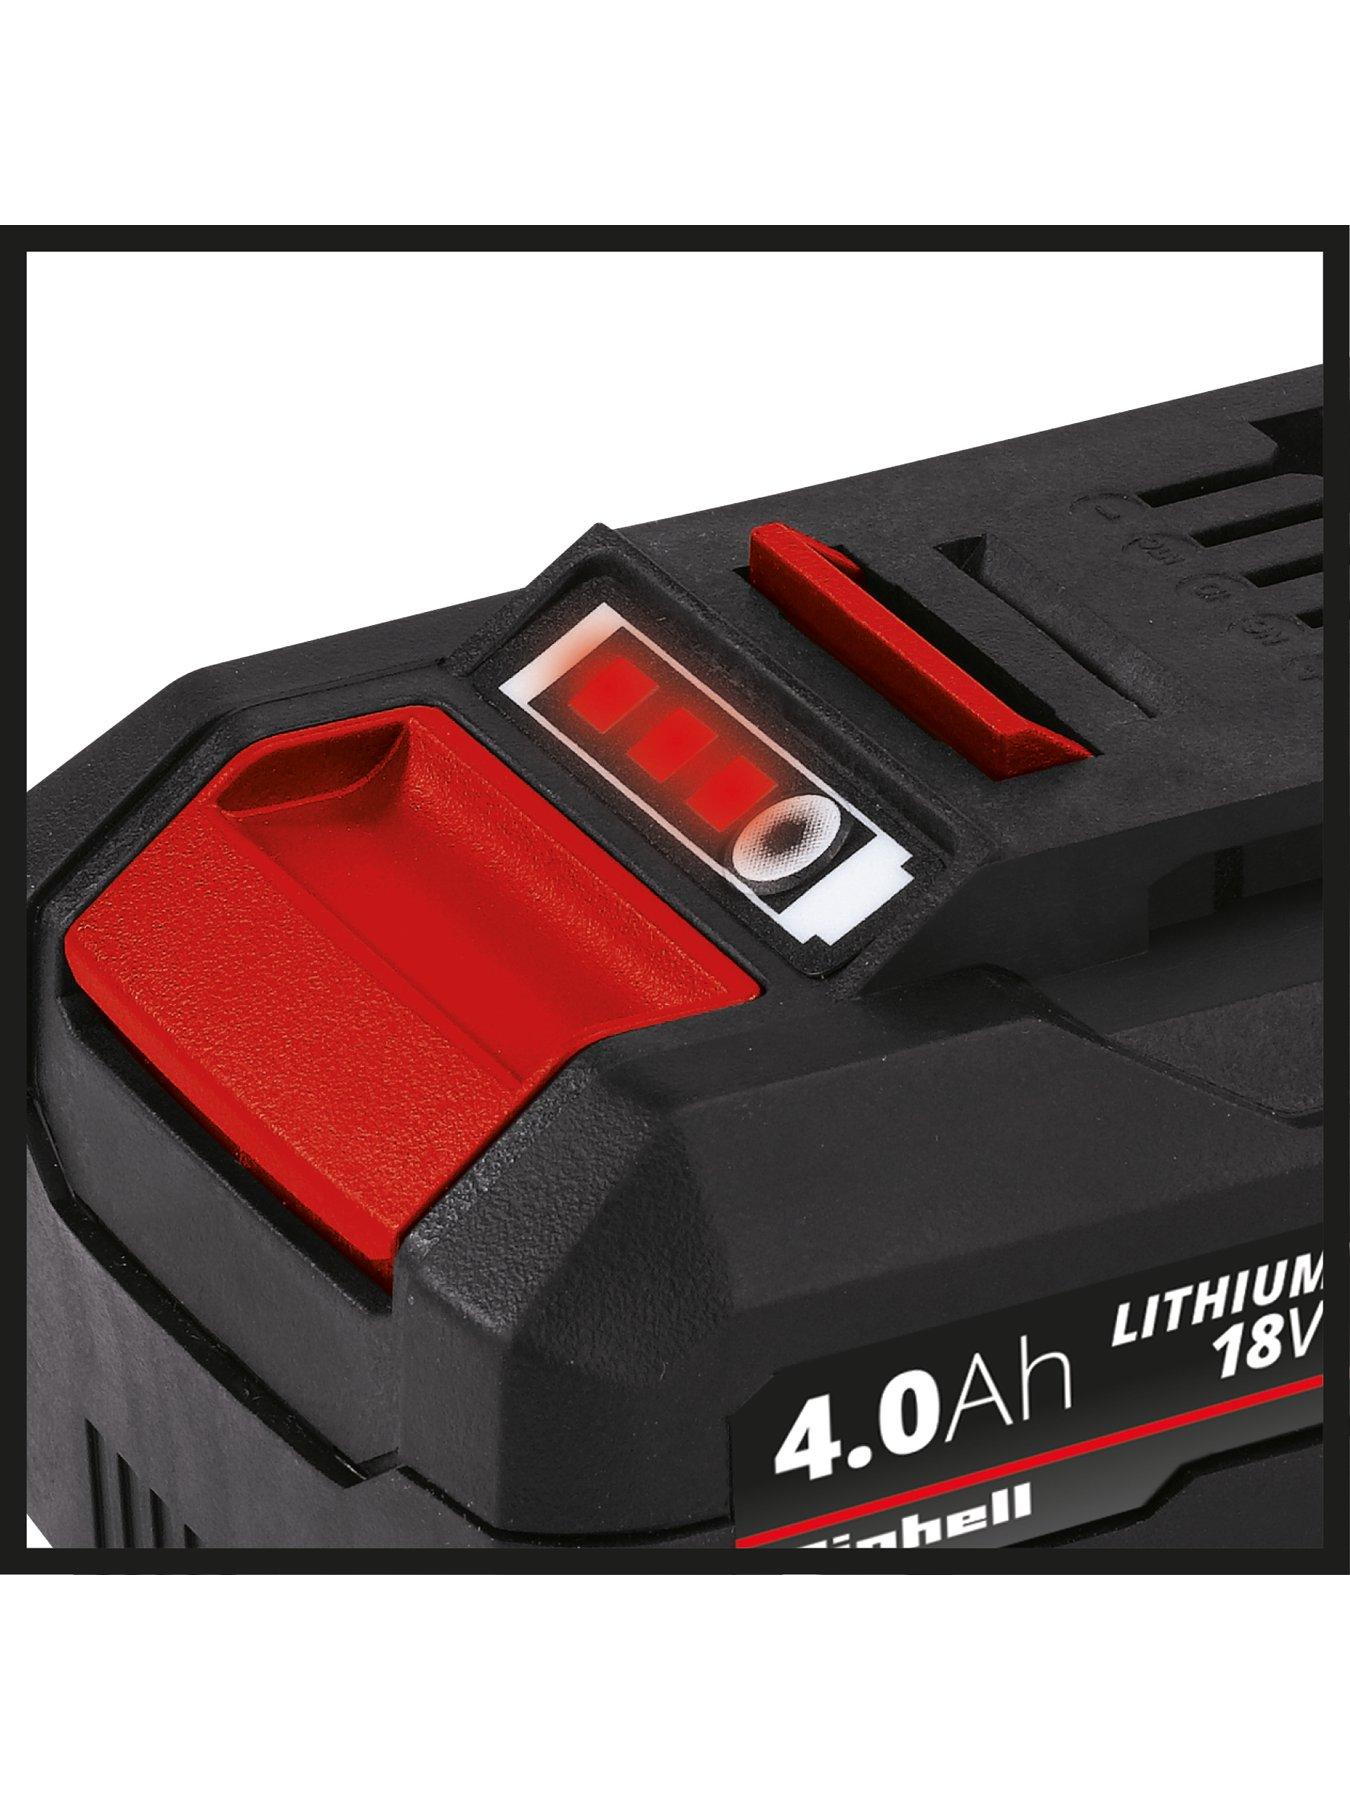 Batería 18V Twinpack 4.0AH Einhell Power X-Change